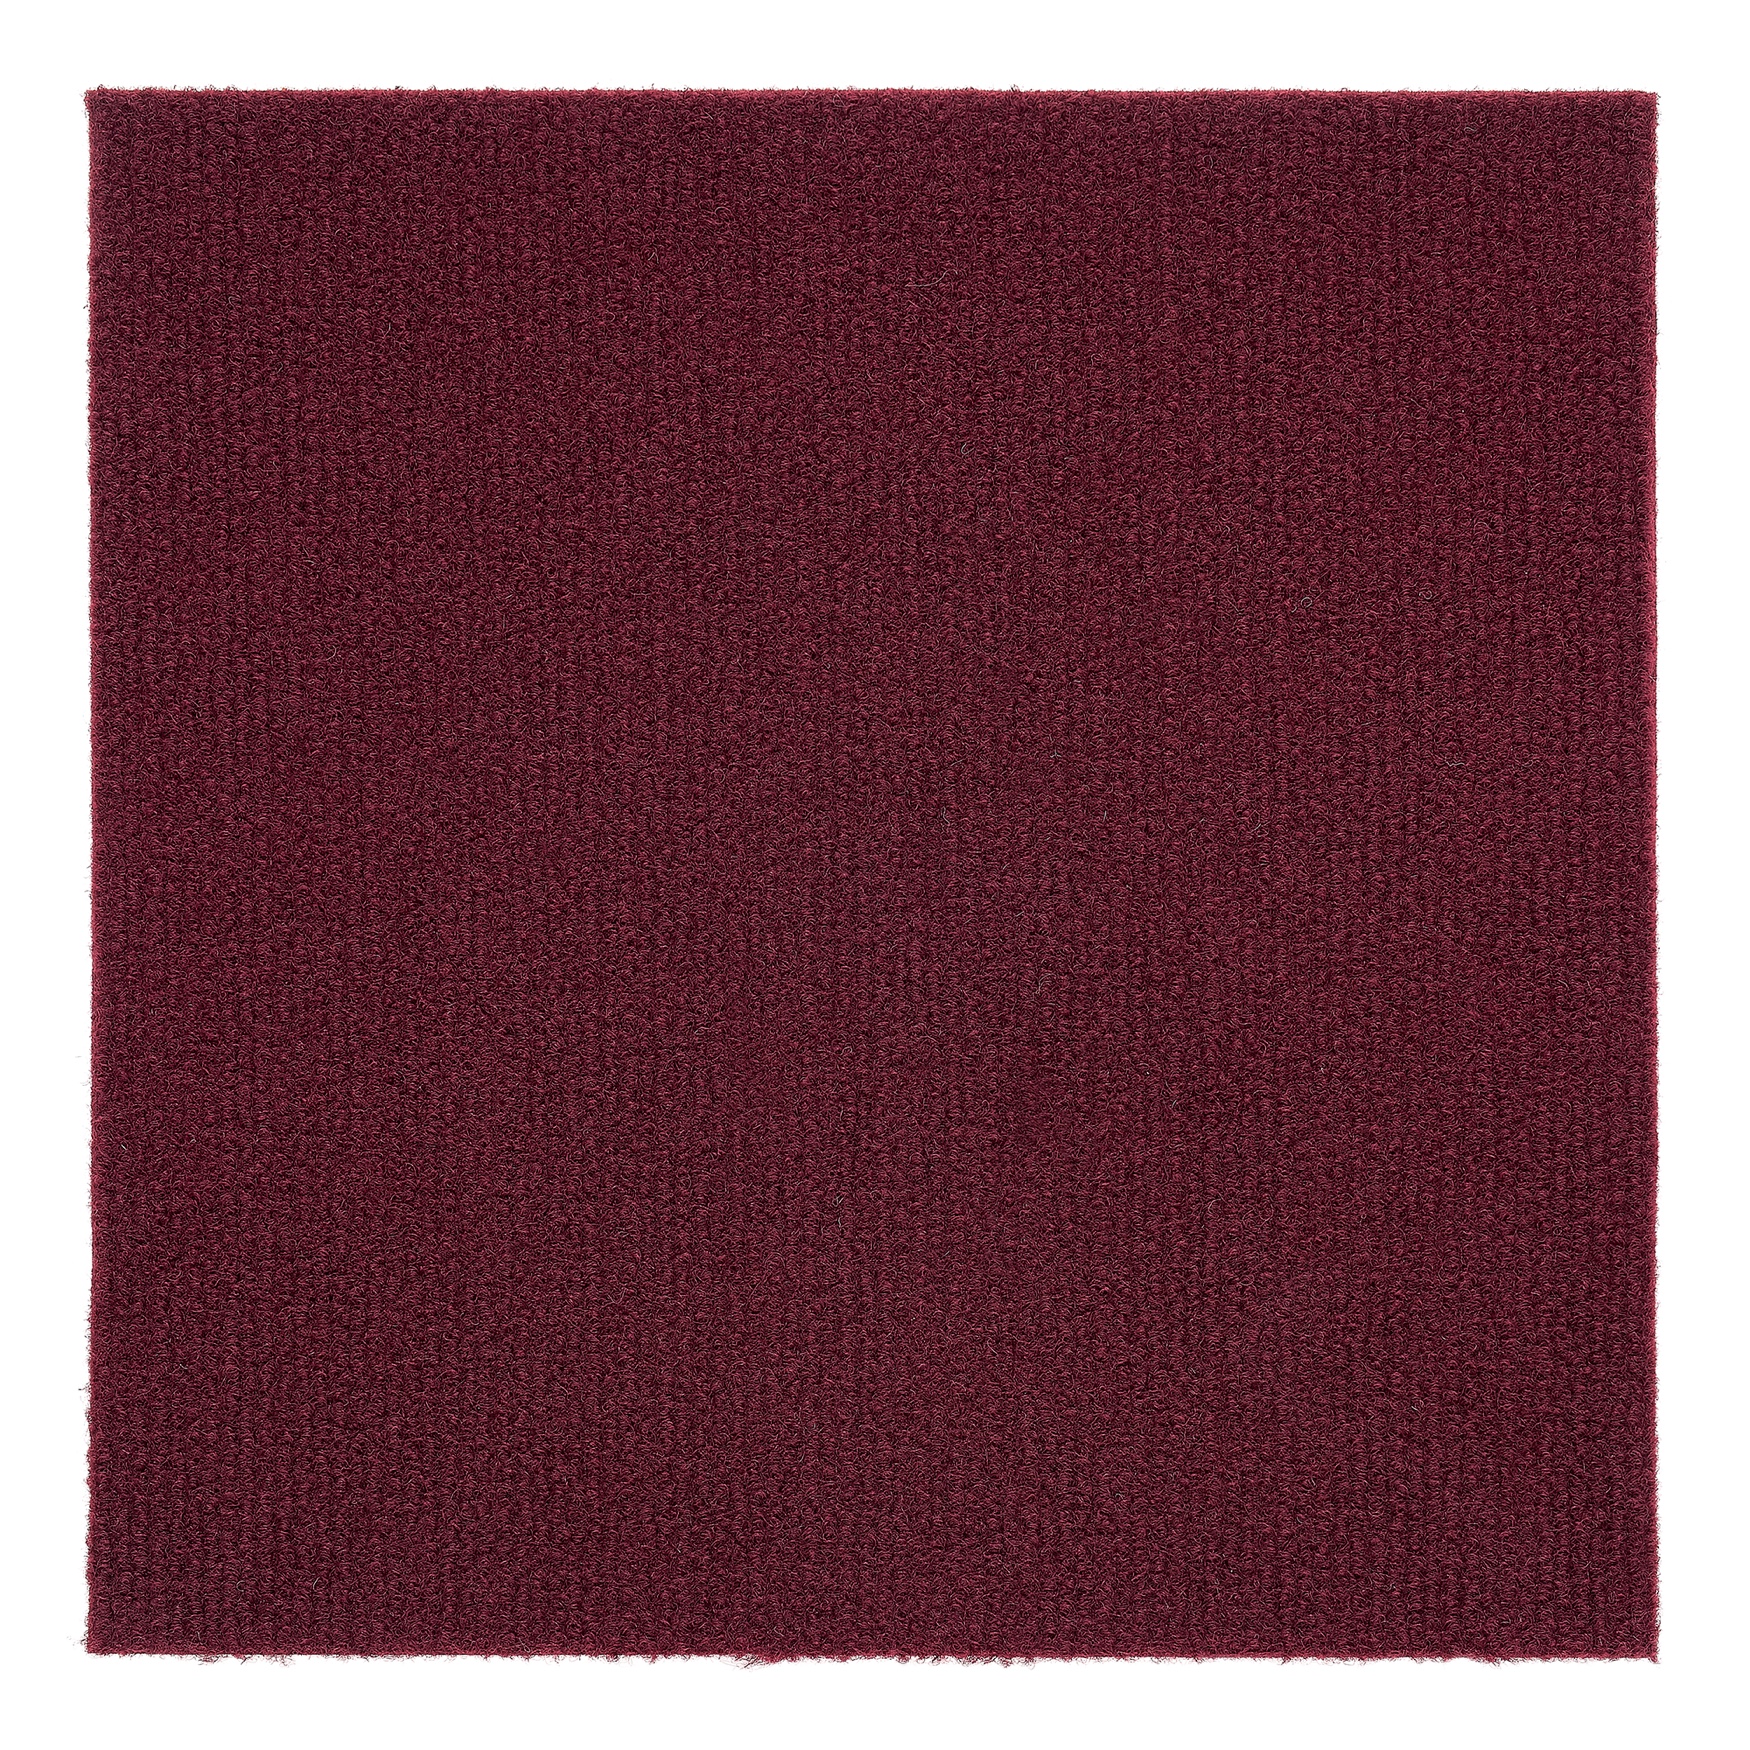 Nexus 12&quot; x 12&quot; Self Adhesive Carpet Floor Tile - 12 Tiles/12 sq. Ft., 